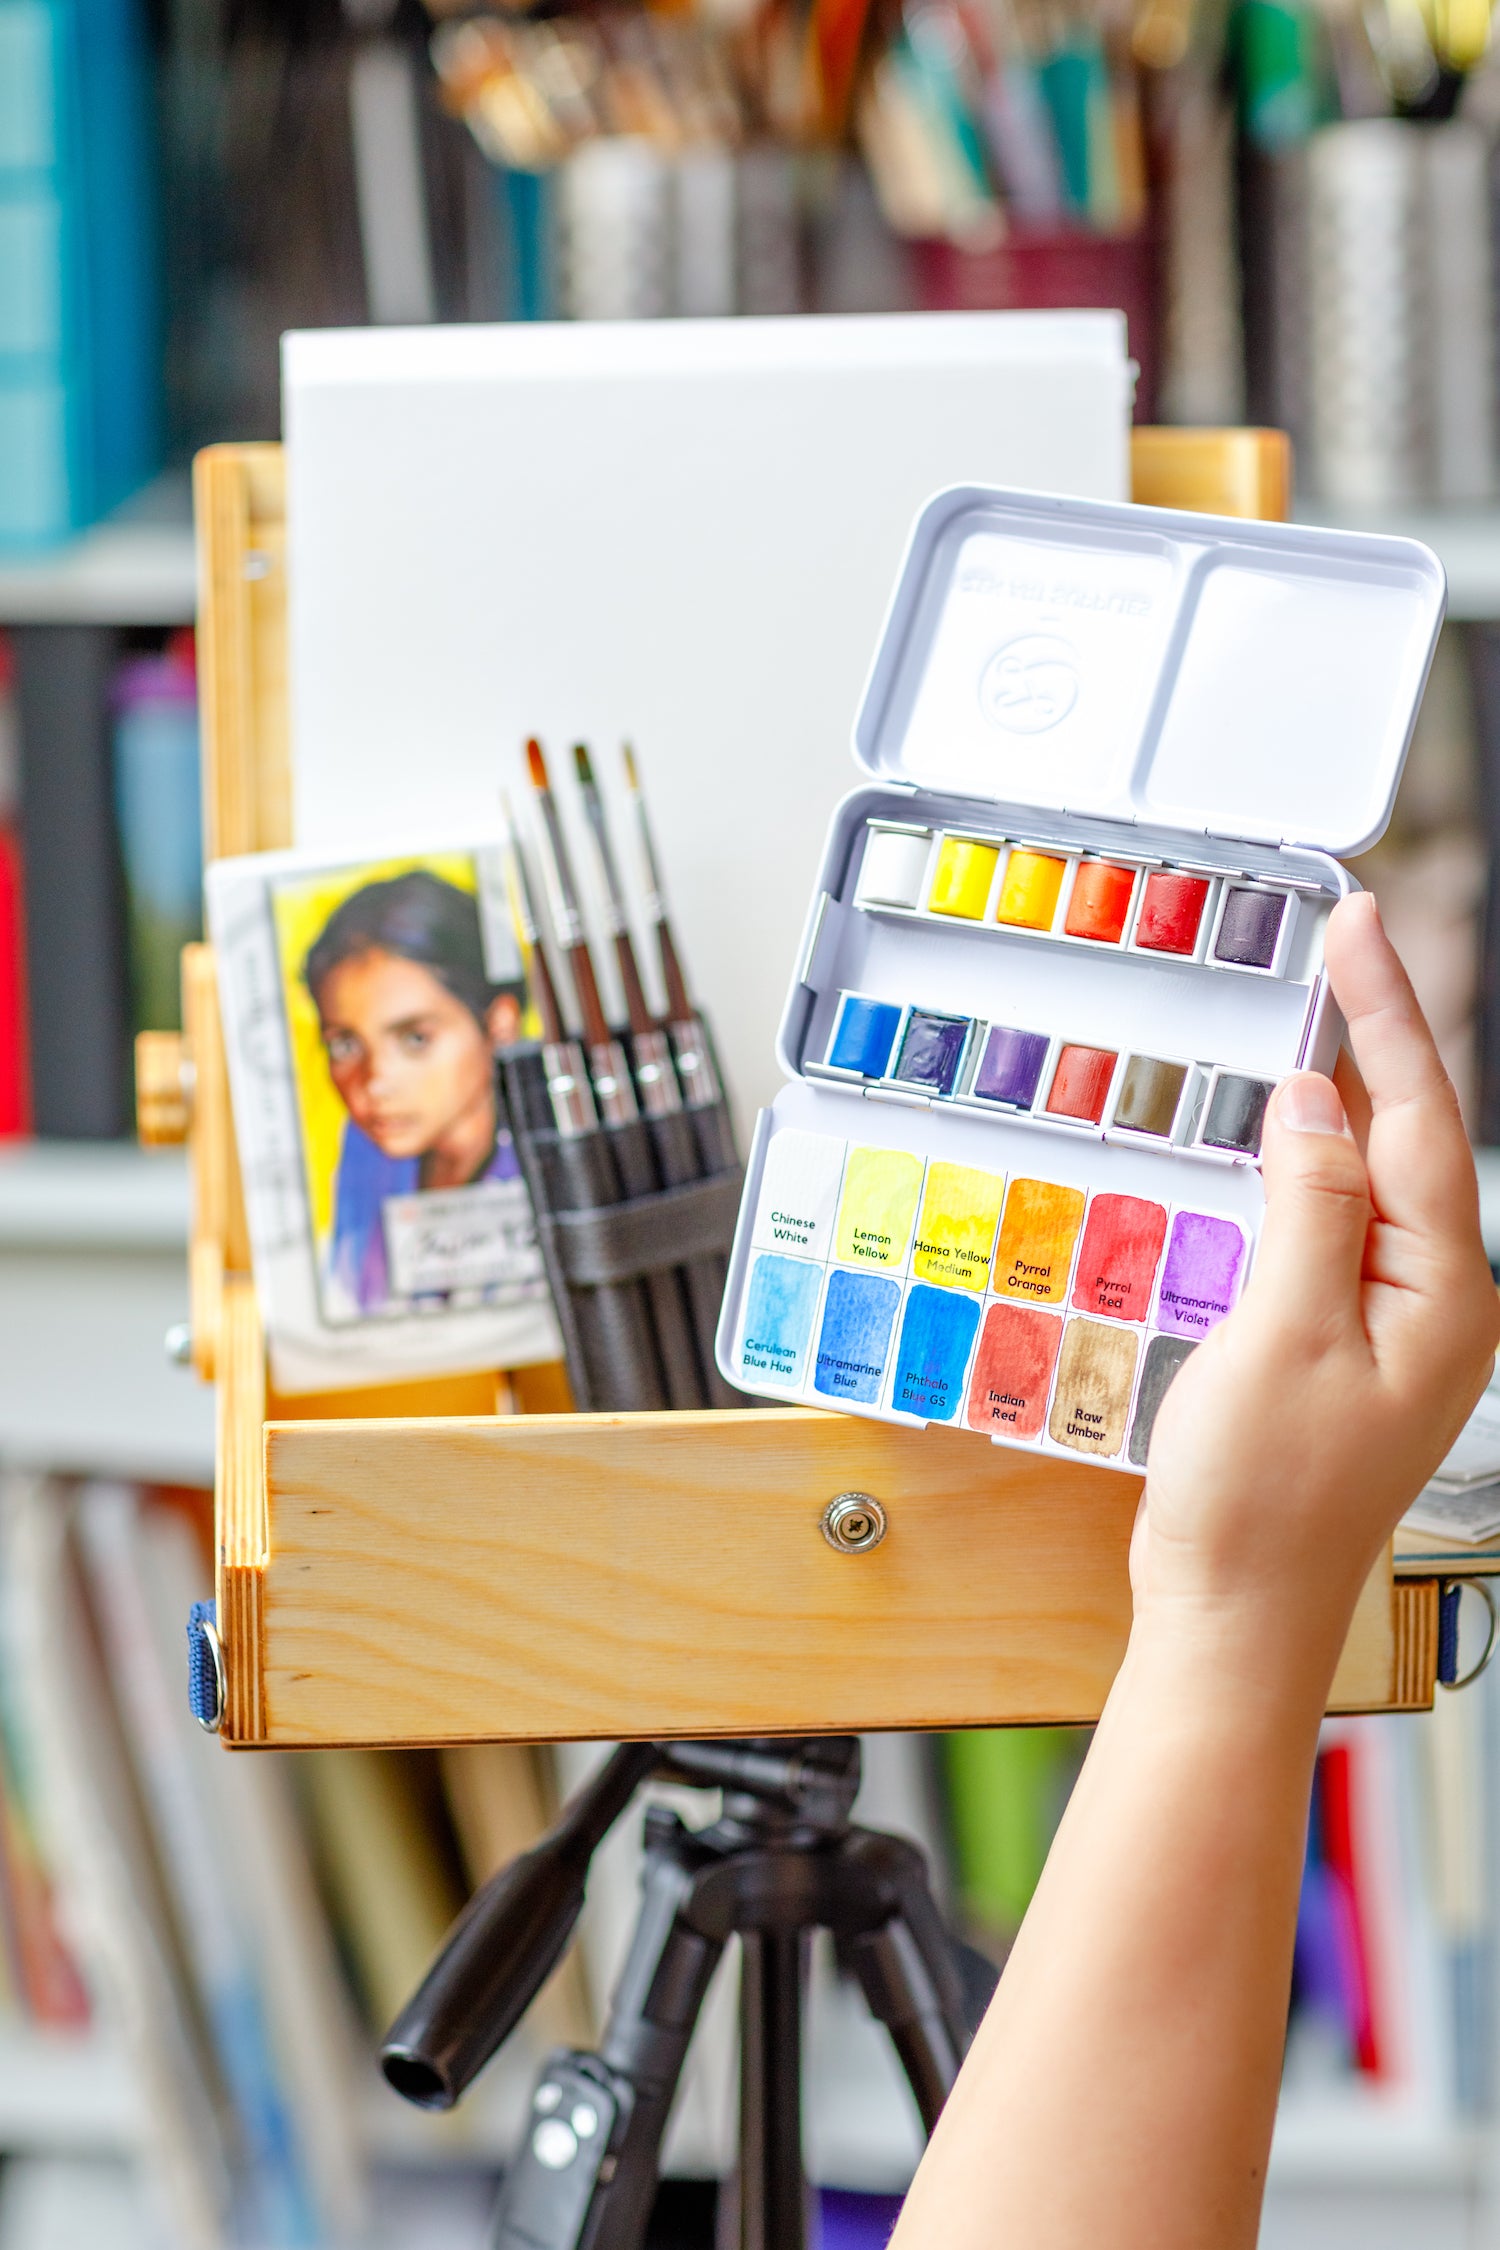 How To Paint Watercolor On Canvas – ZenARTSupplies